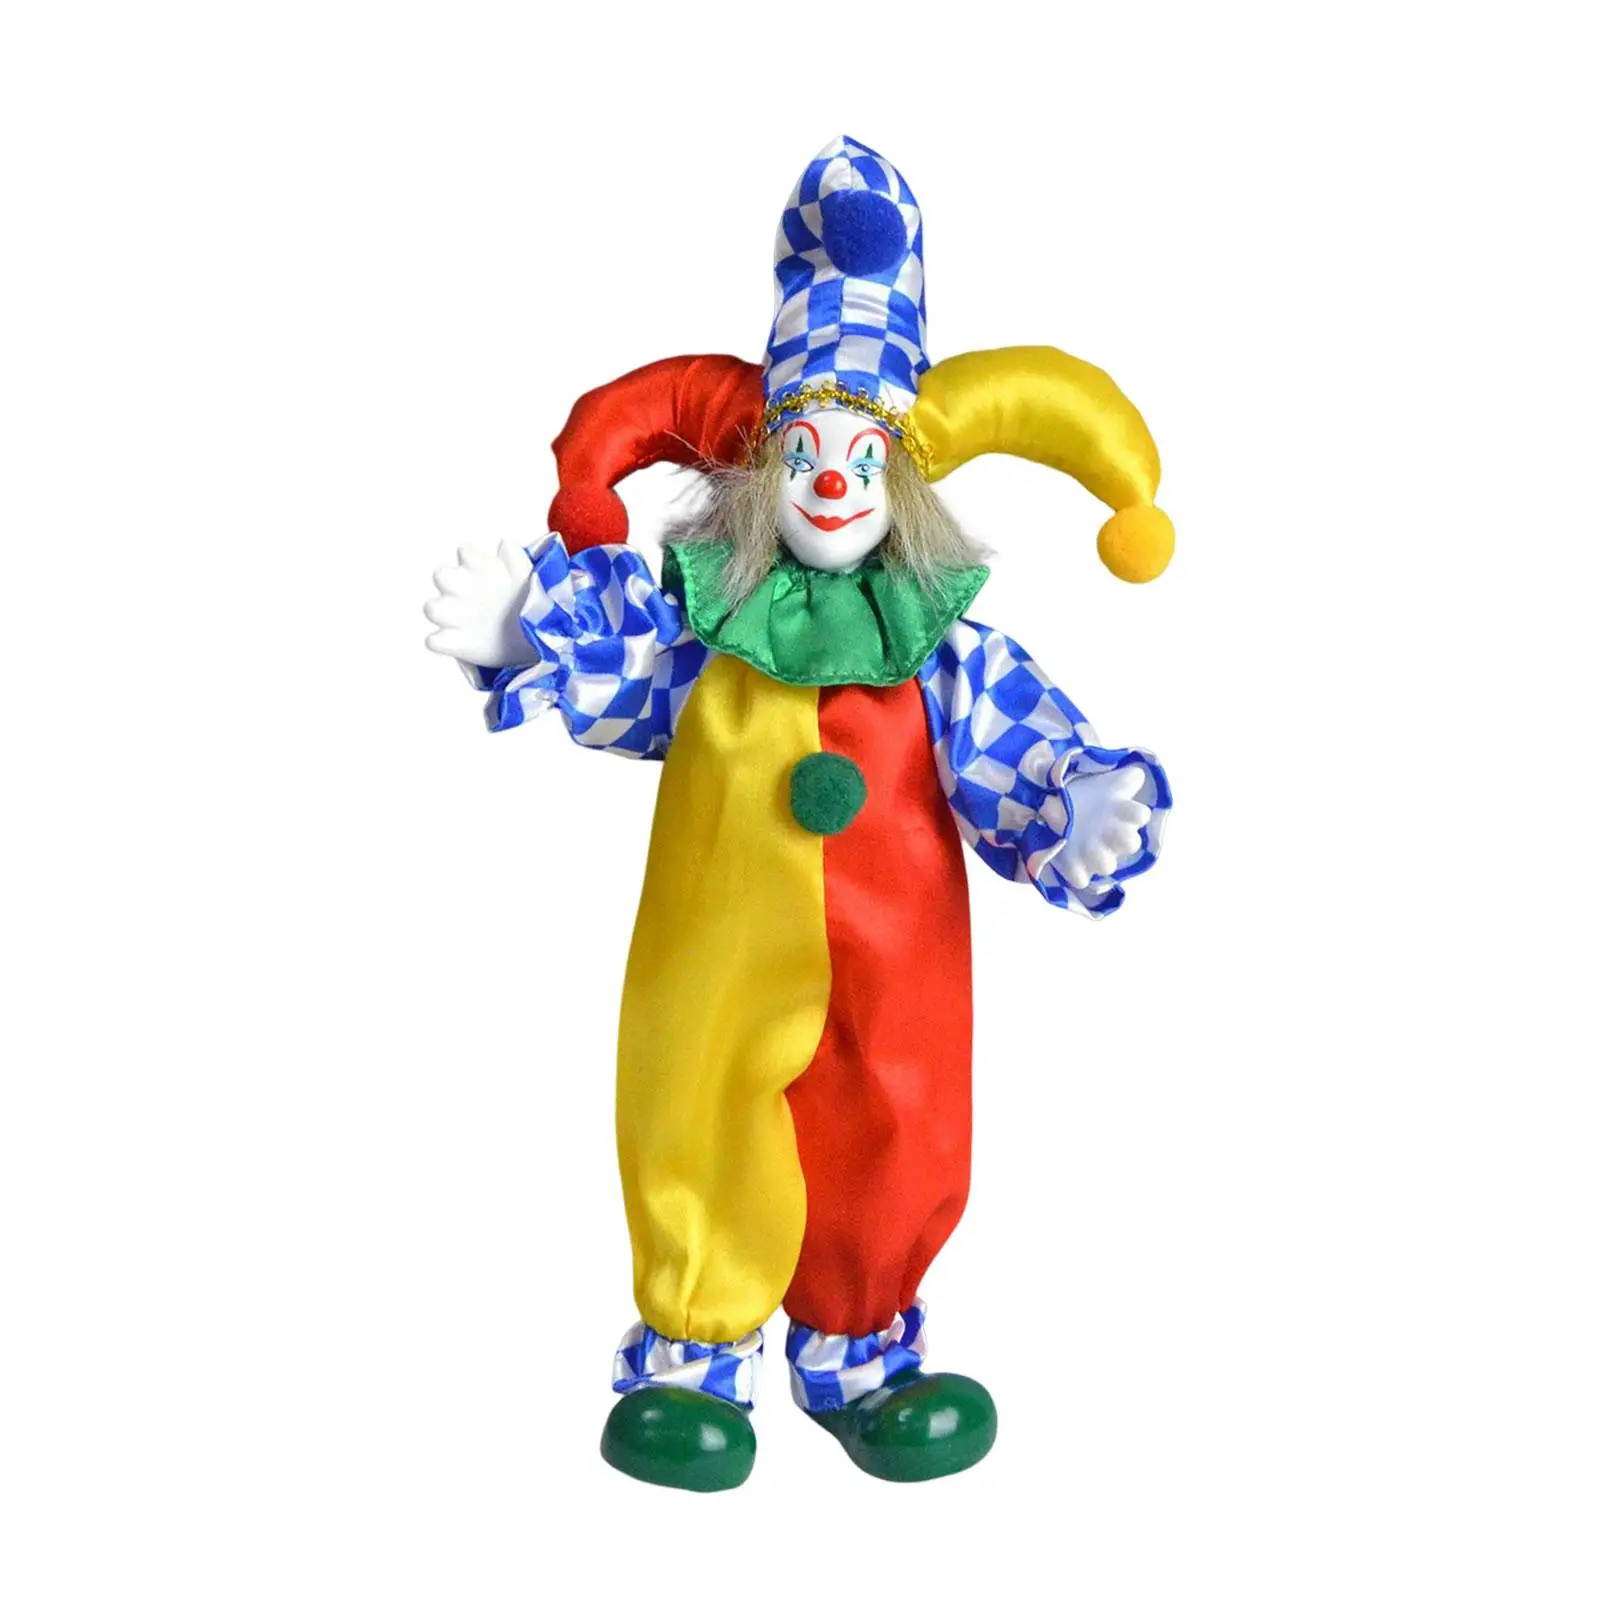 24cm Tall Clown Doll Figure for Halloween Decoration Ornaments